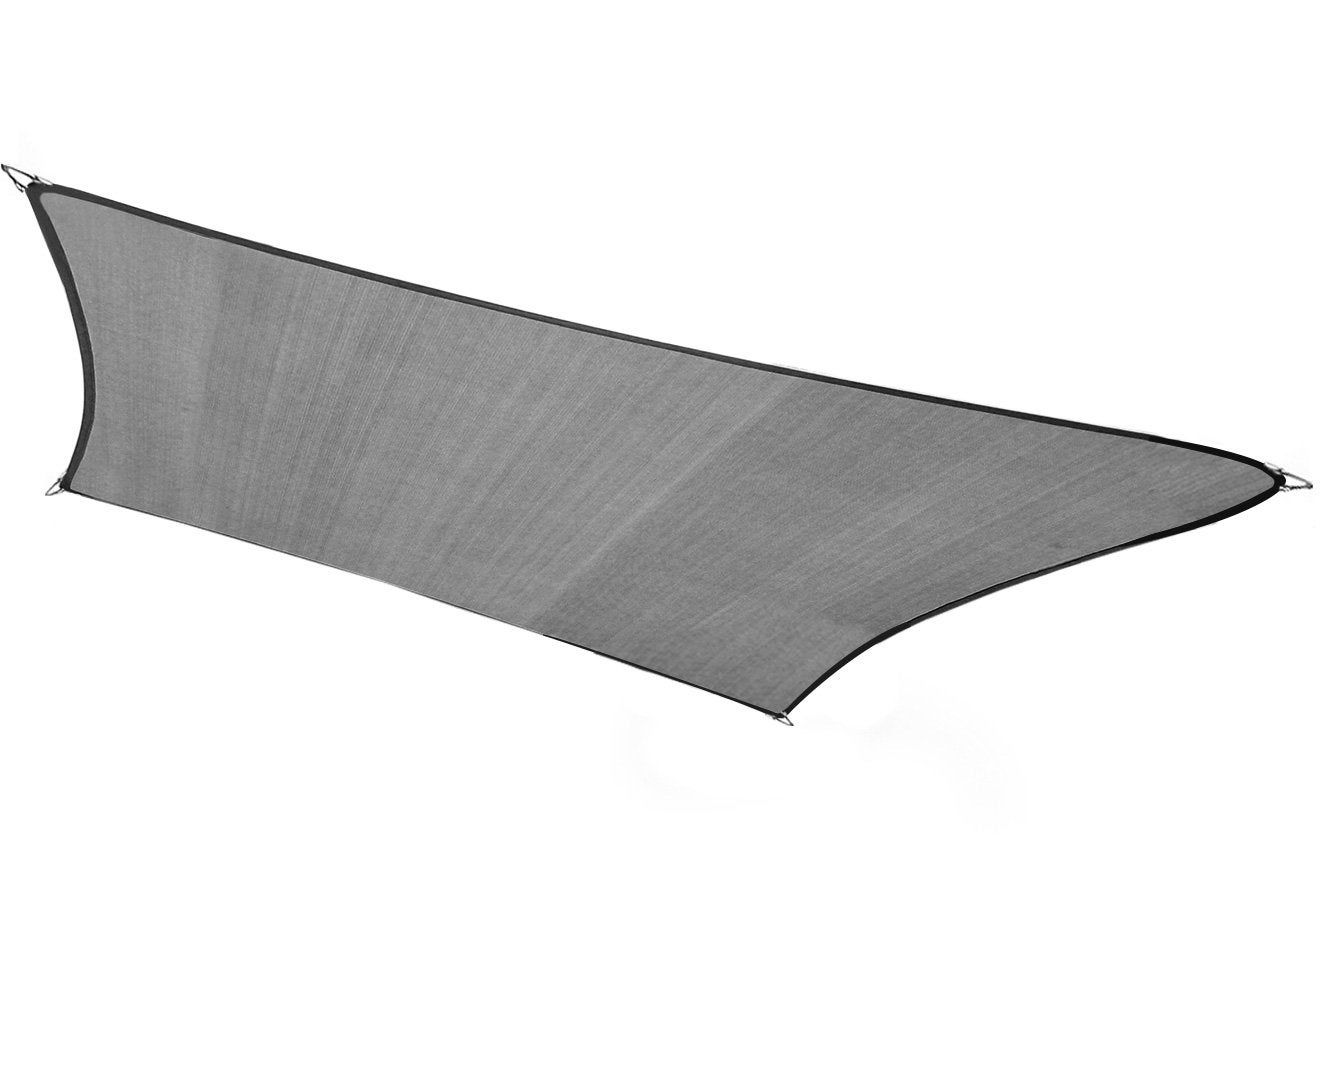 Wallaroo 4m X 5m Outdoor Sun Shade Sail Canopy - Grey Cloth Rectangle